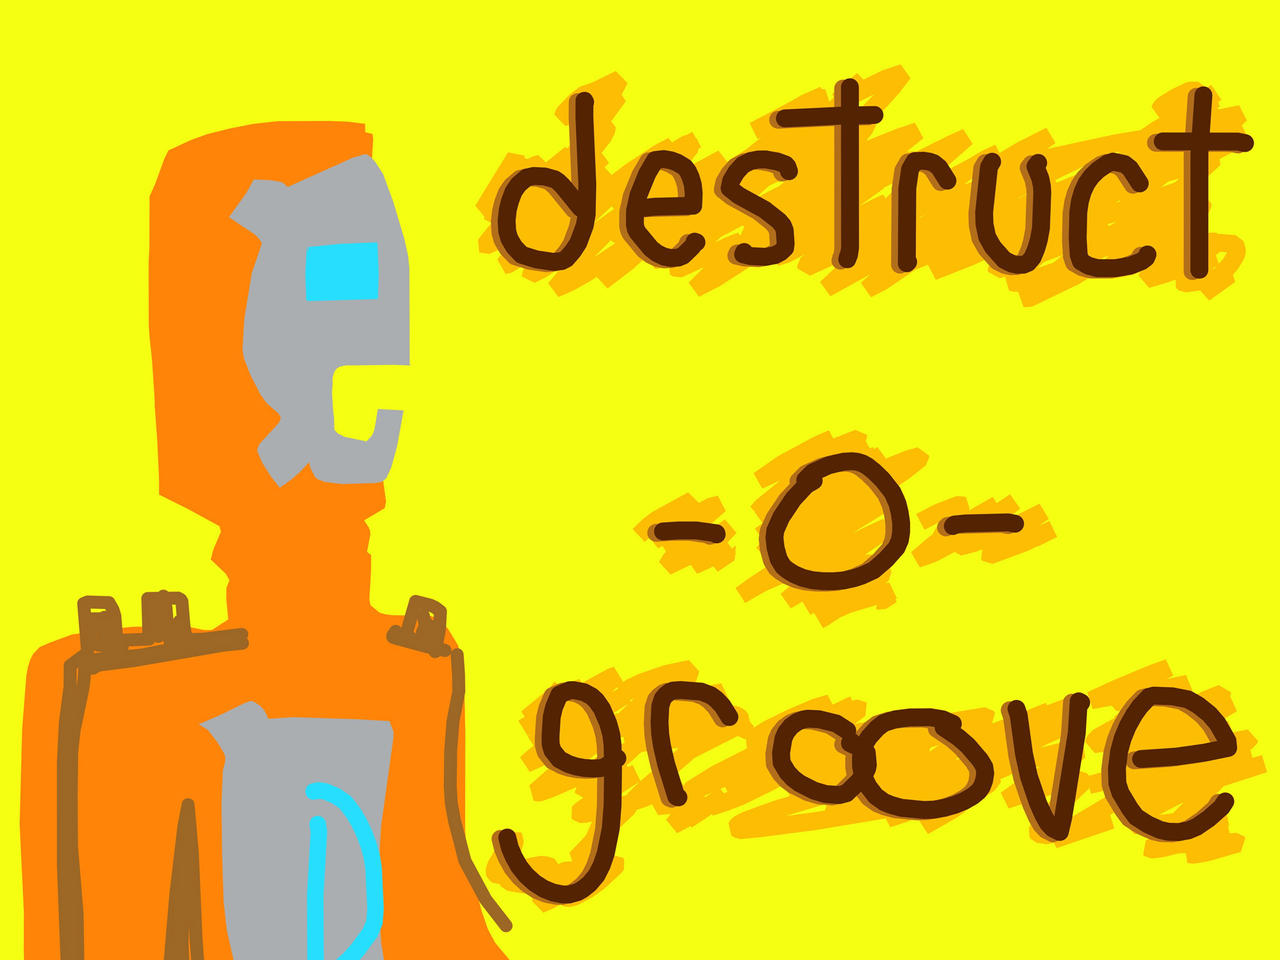 Destruct-O-Groove - 7 Star Sky Flash Kick